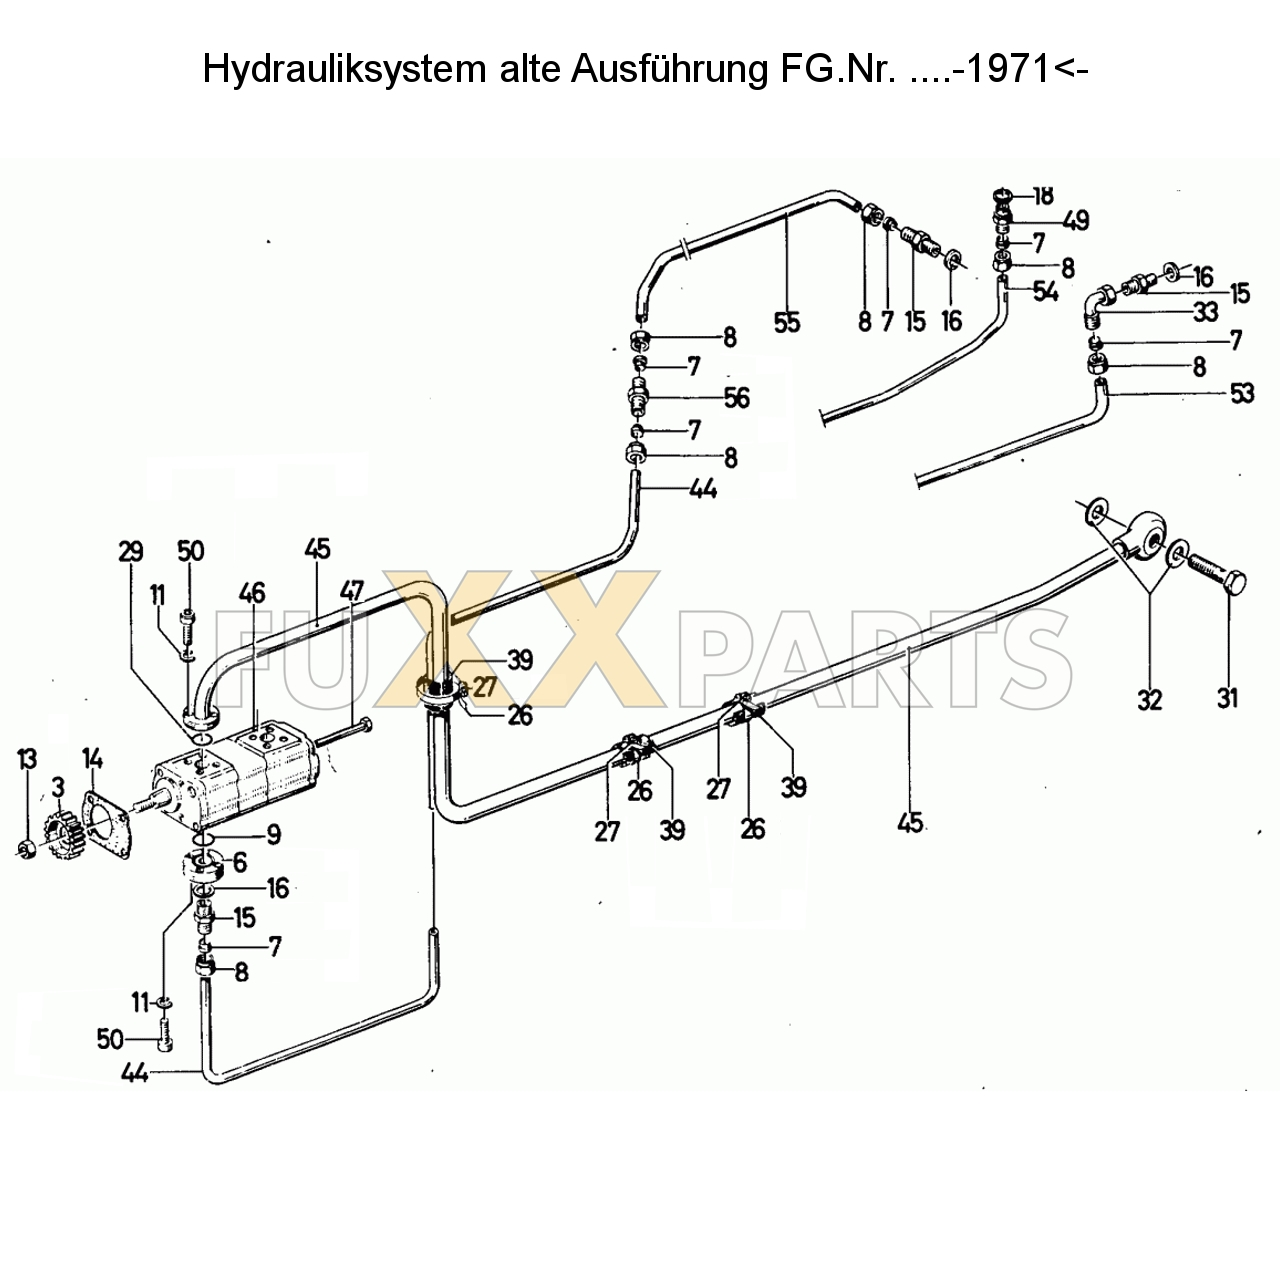 D 13006 Hydrauliksystem alte Ausführung